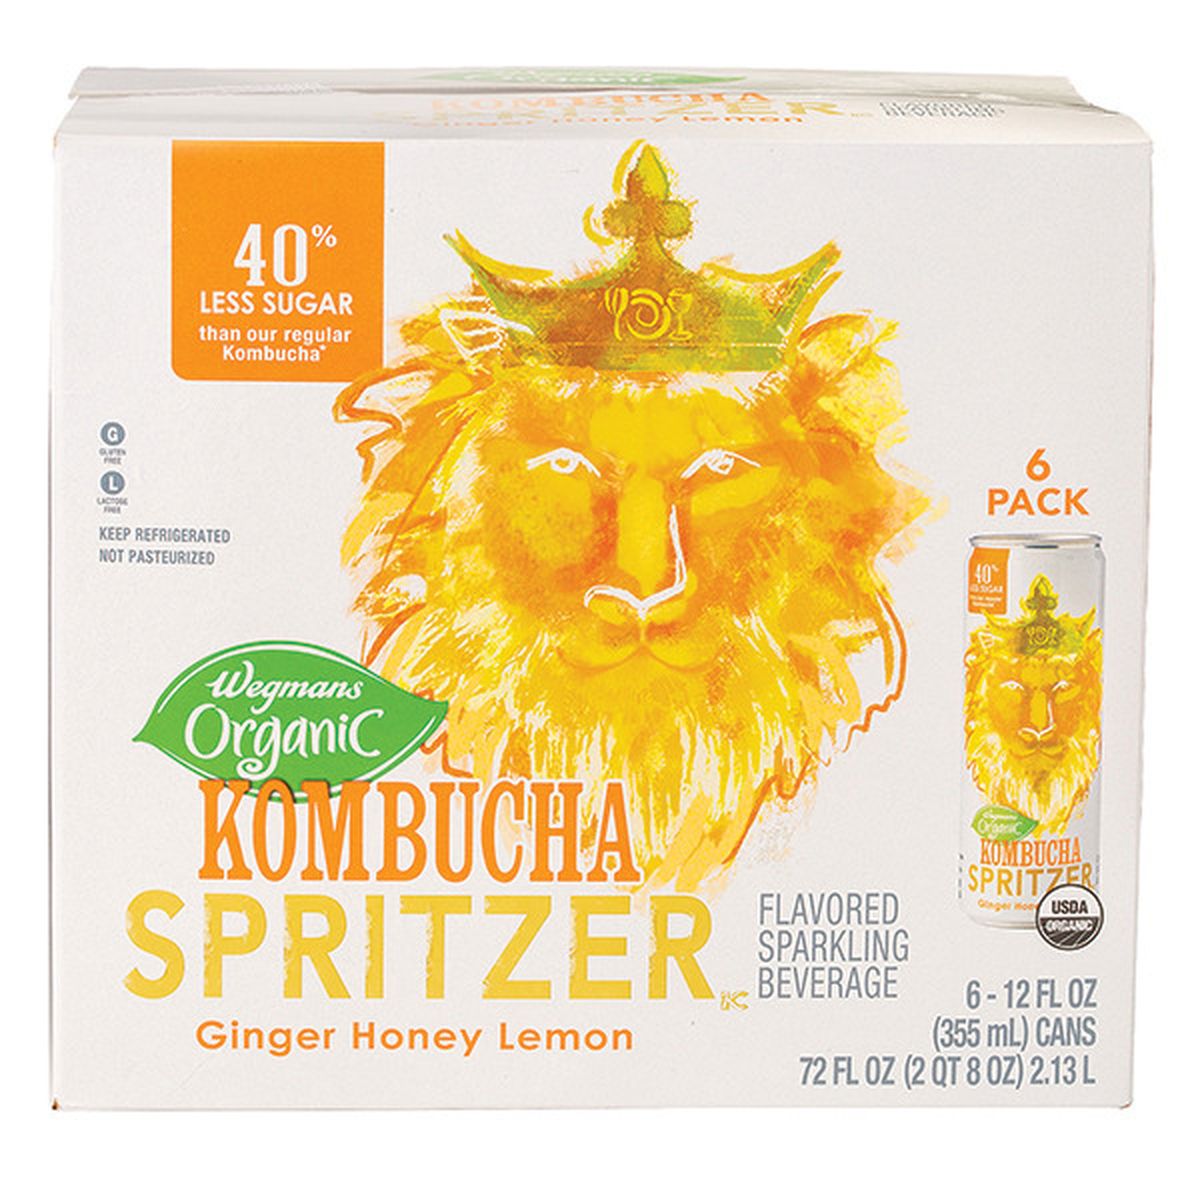 Calories in Wegmans Organic Ginger Honey Lemon Kombucha Spritzer, 6 Pack